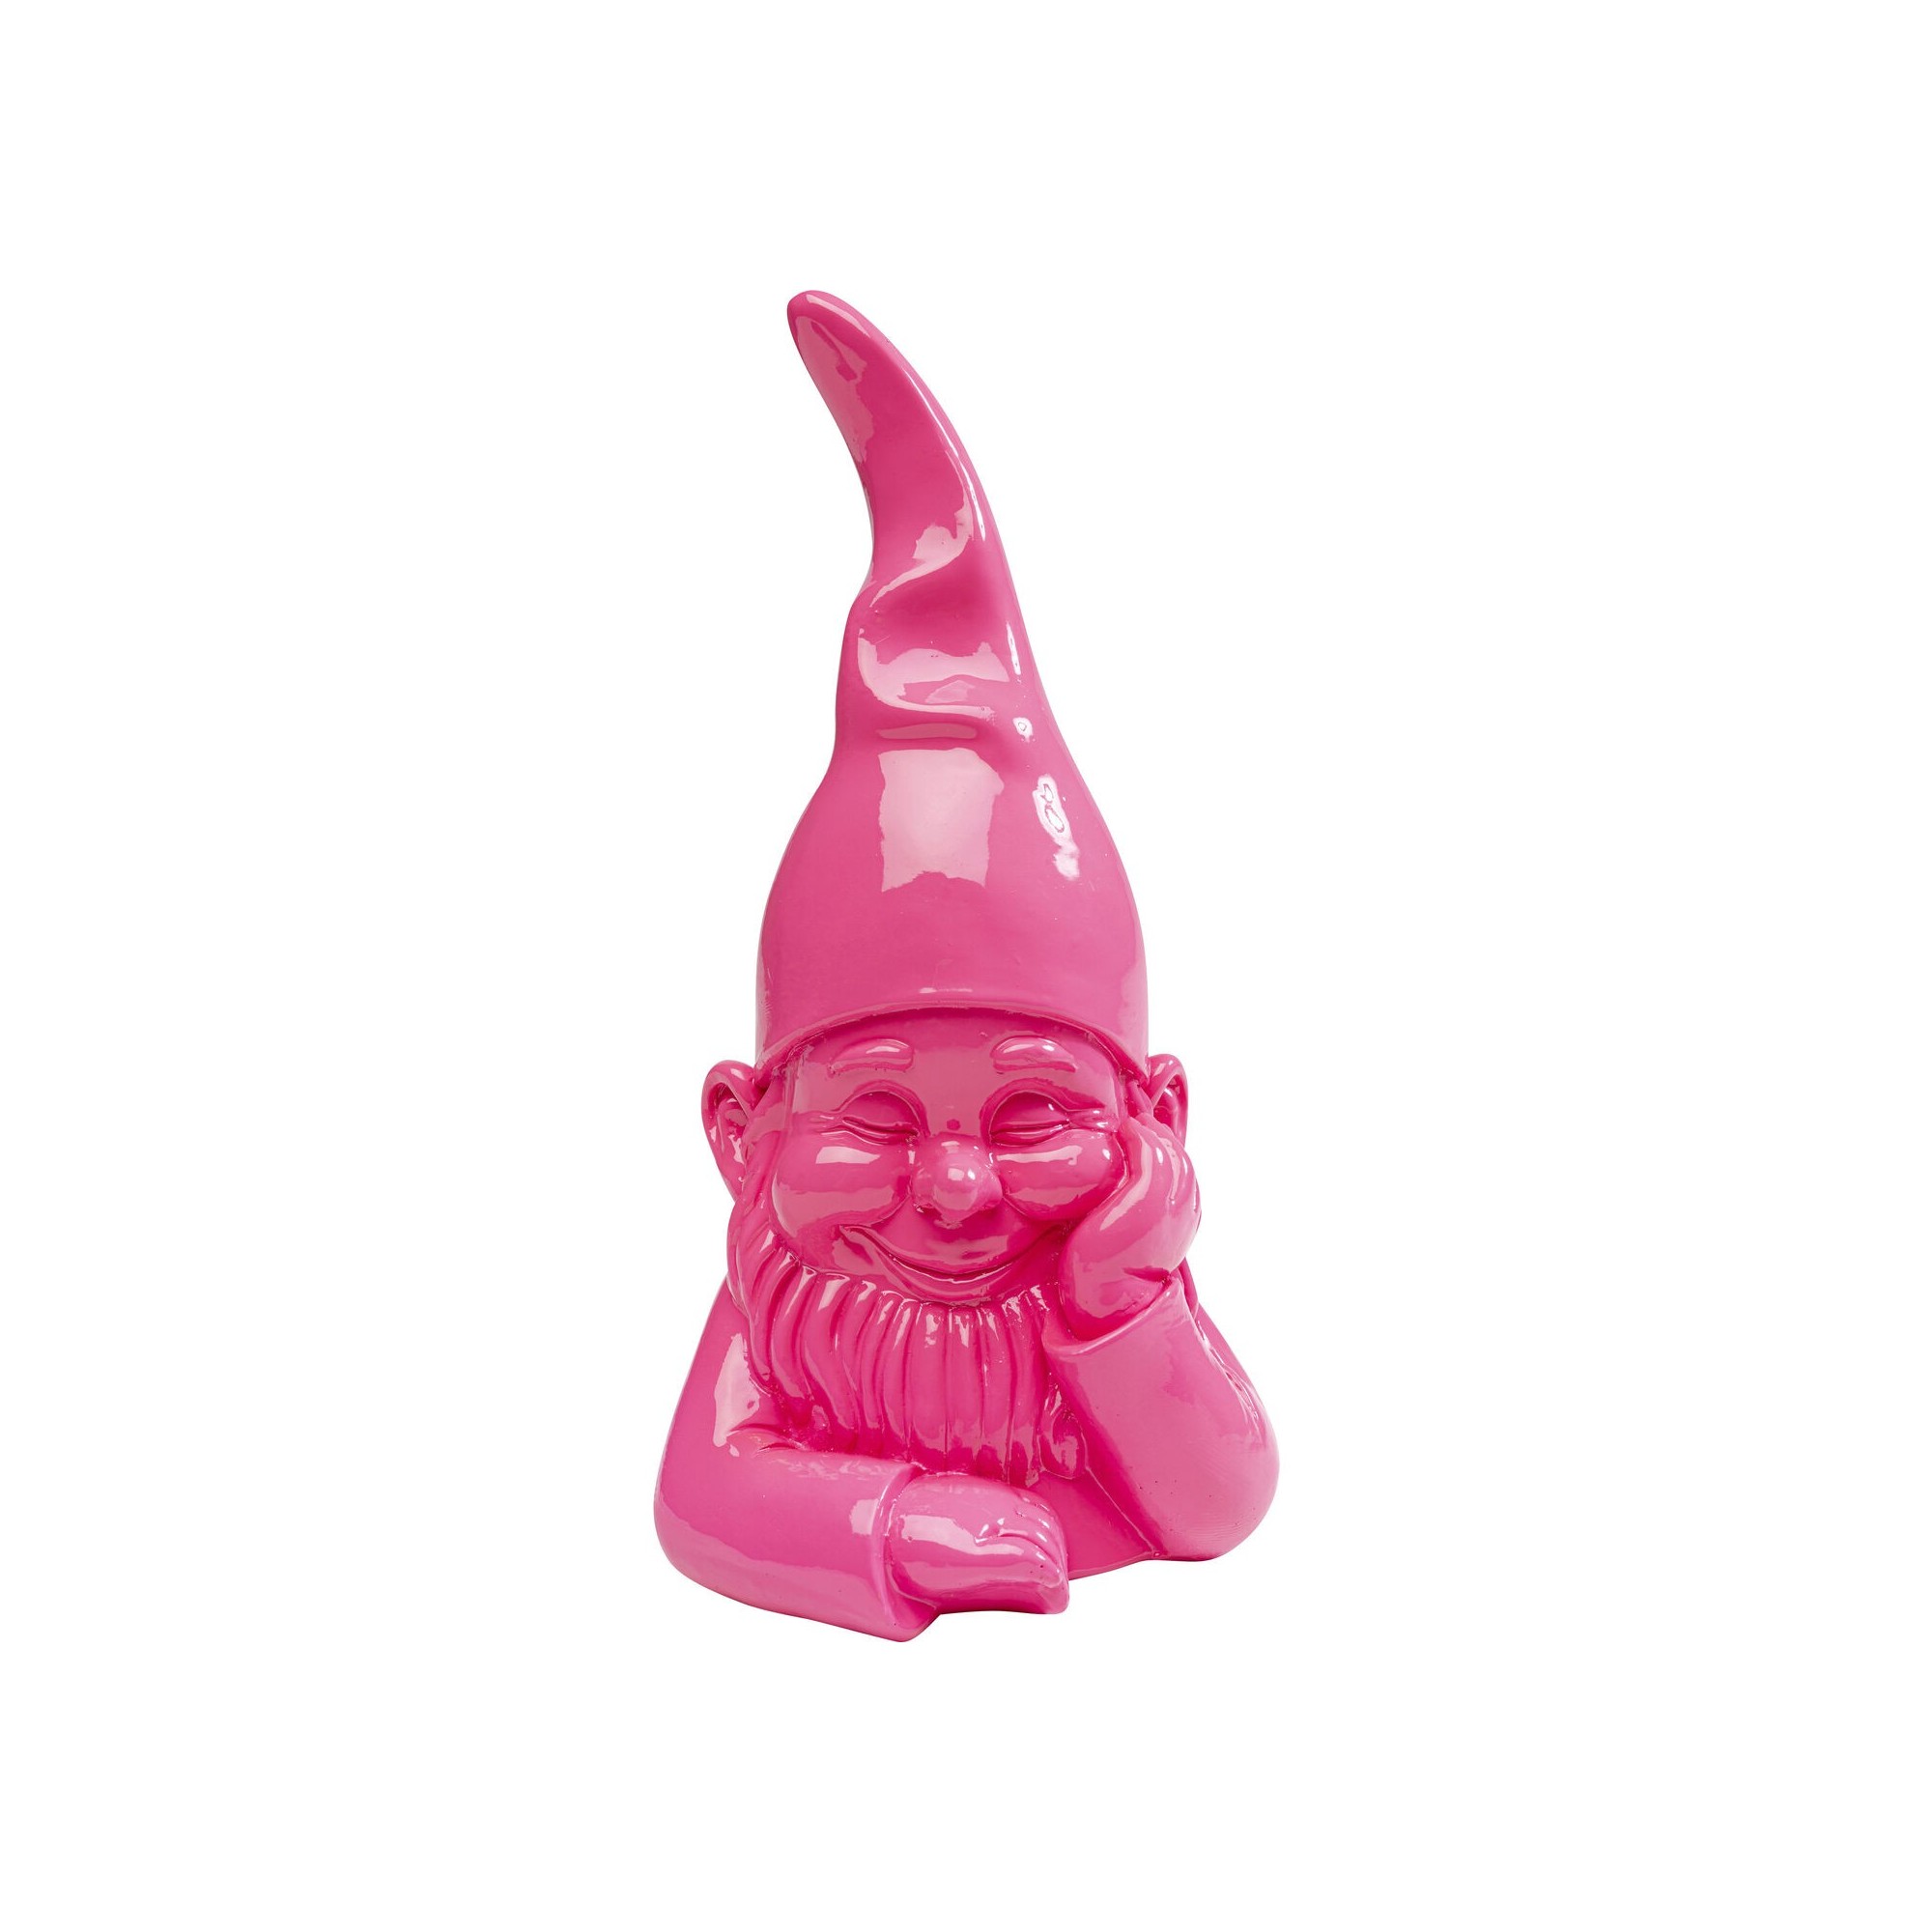 Figurine décorative Nain pink 21cm